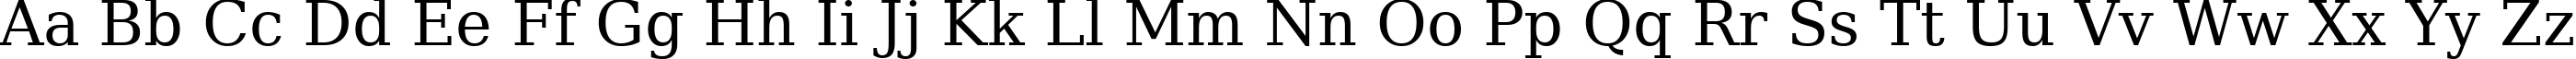 Пример написания английского алфавита шрифтом ae_Sindibad